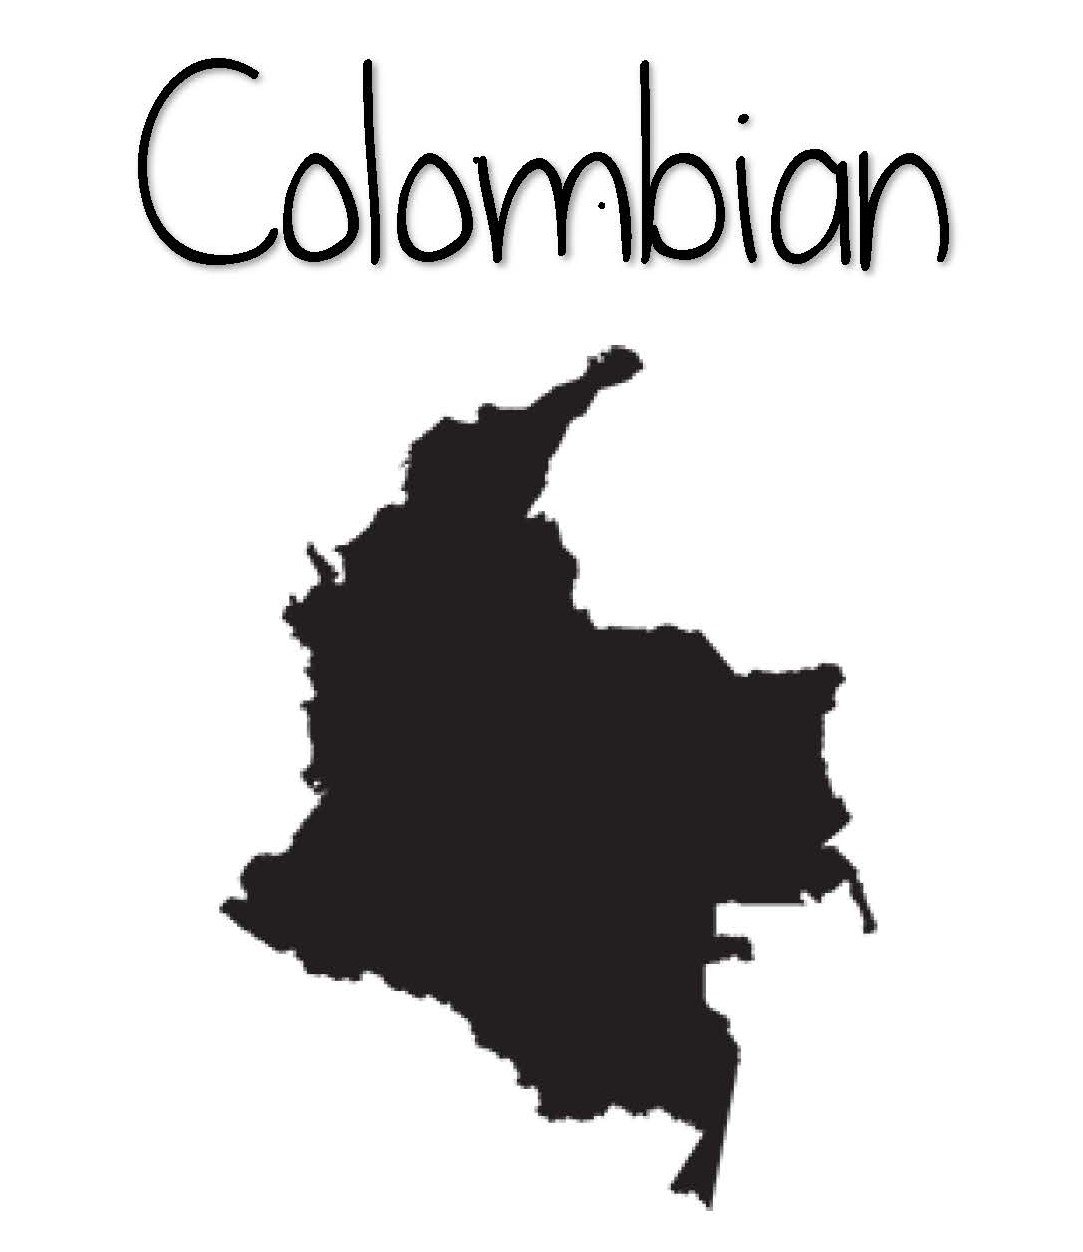 Colombian stamp 2.jpg